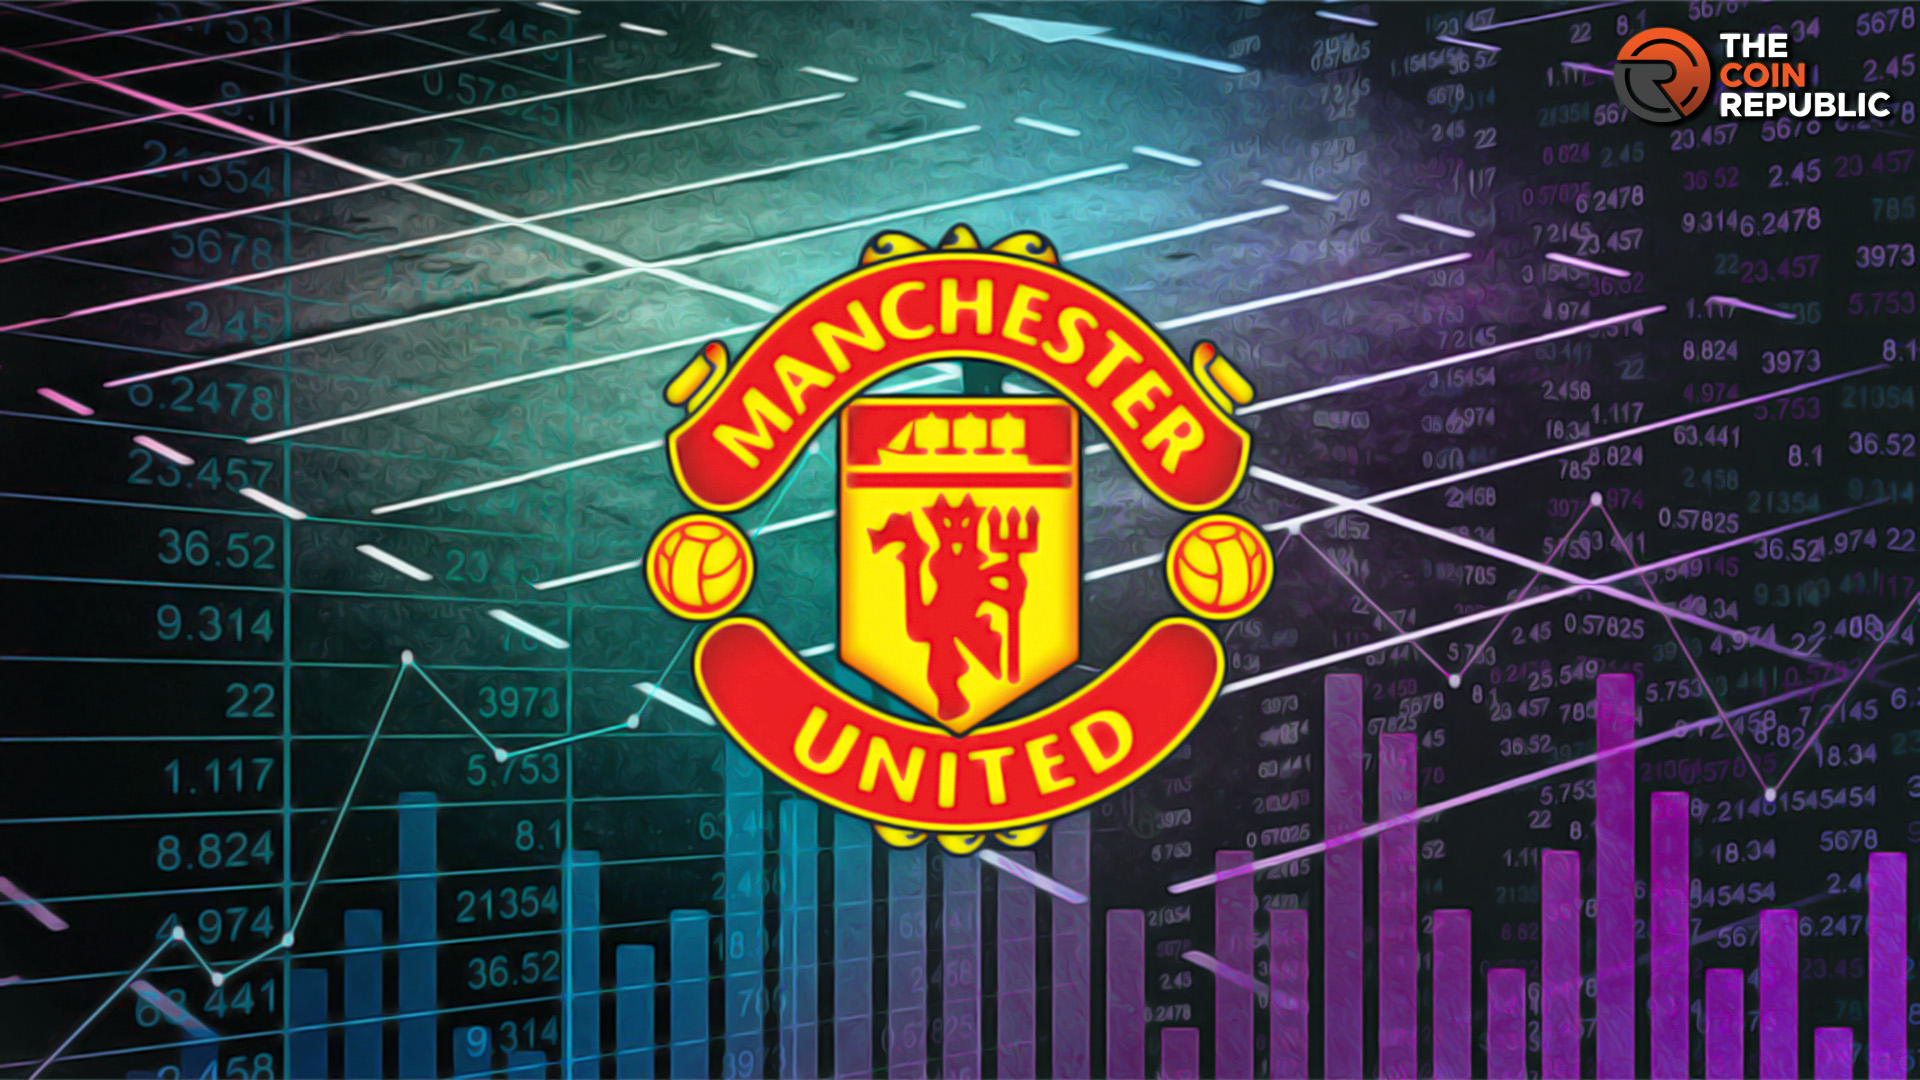 Will Manchester United (MANU) Stock Price Take A Bullish Ride?